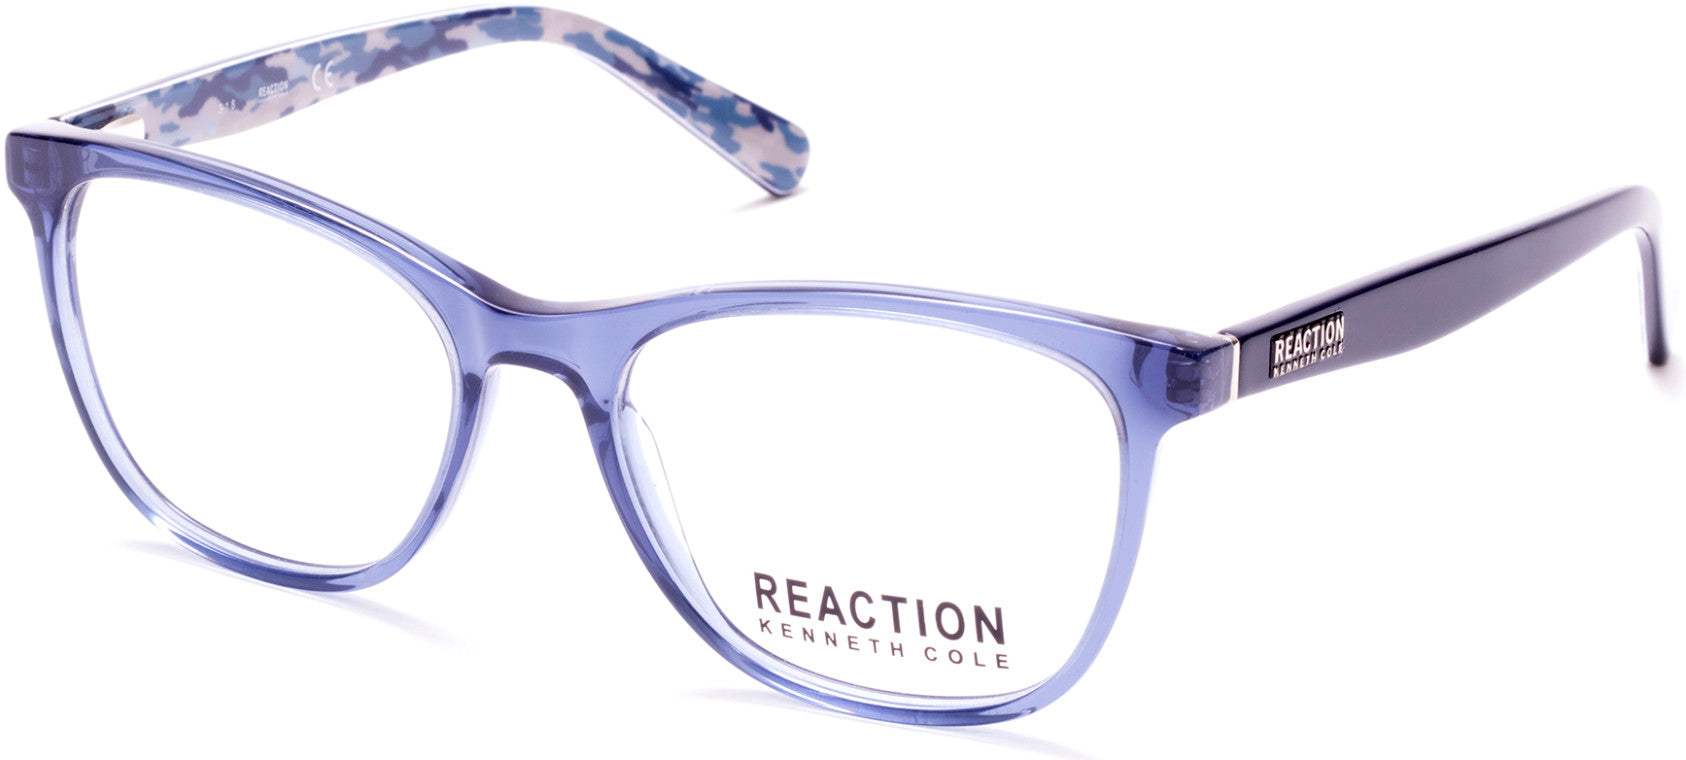 Kenneth Cole New York,Kenneth Cole Reaction KC0806 Geometric Eyeglasses 090-090 - Shiny Blue